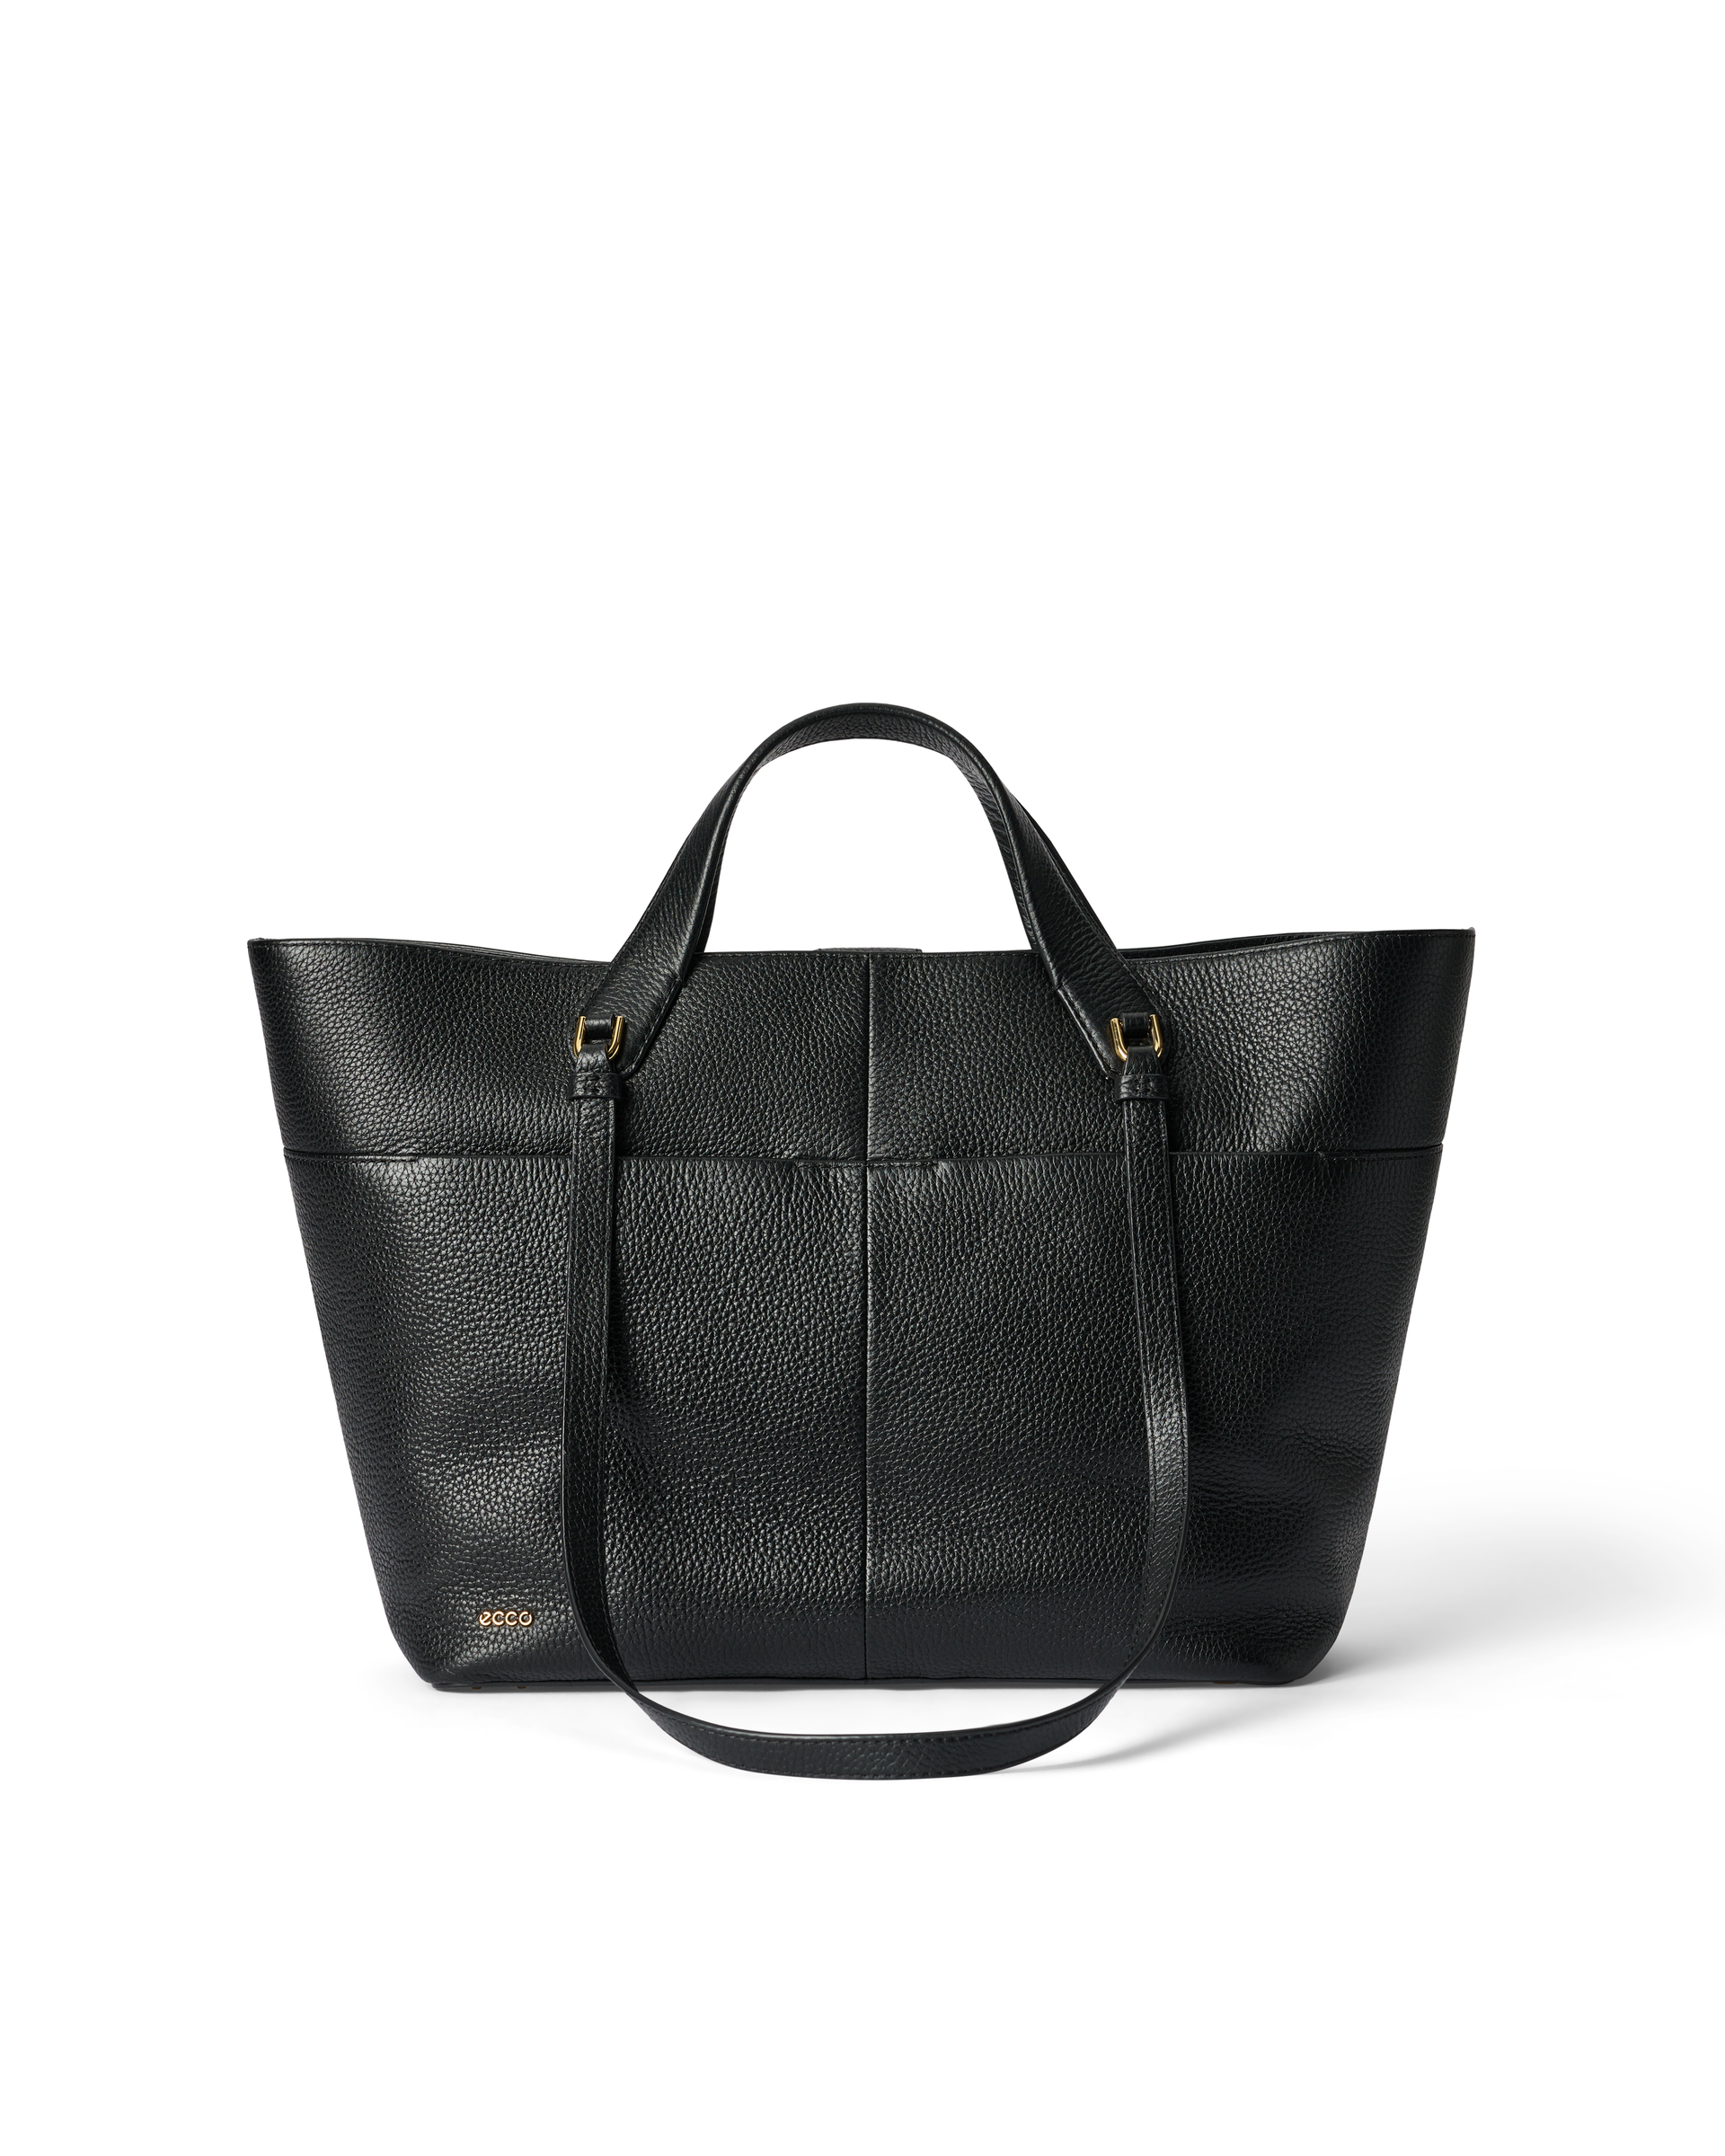 ECCO® Handbags on Sale - Shop Online Now